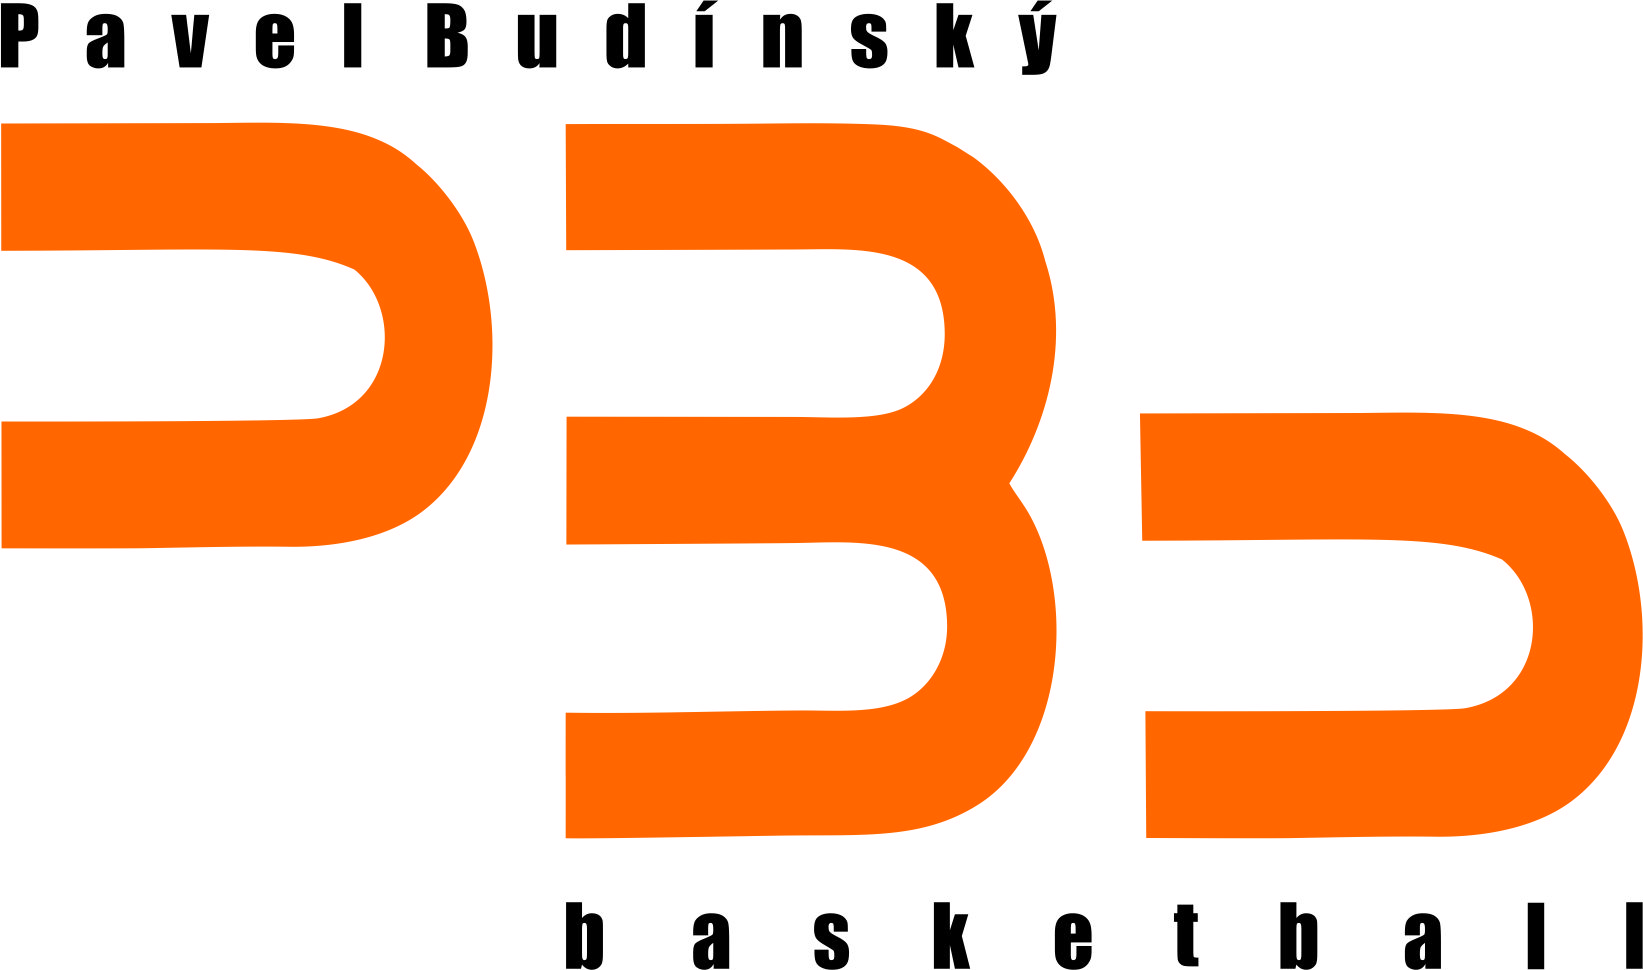 Pavel Budínský basketball